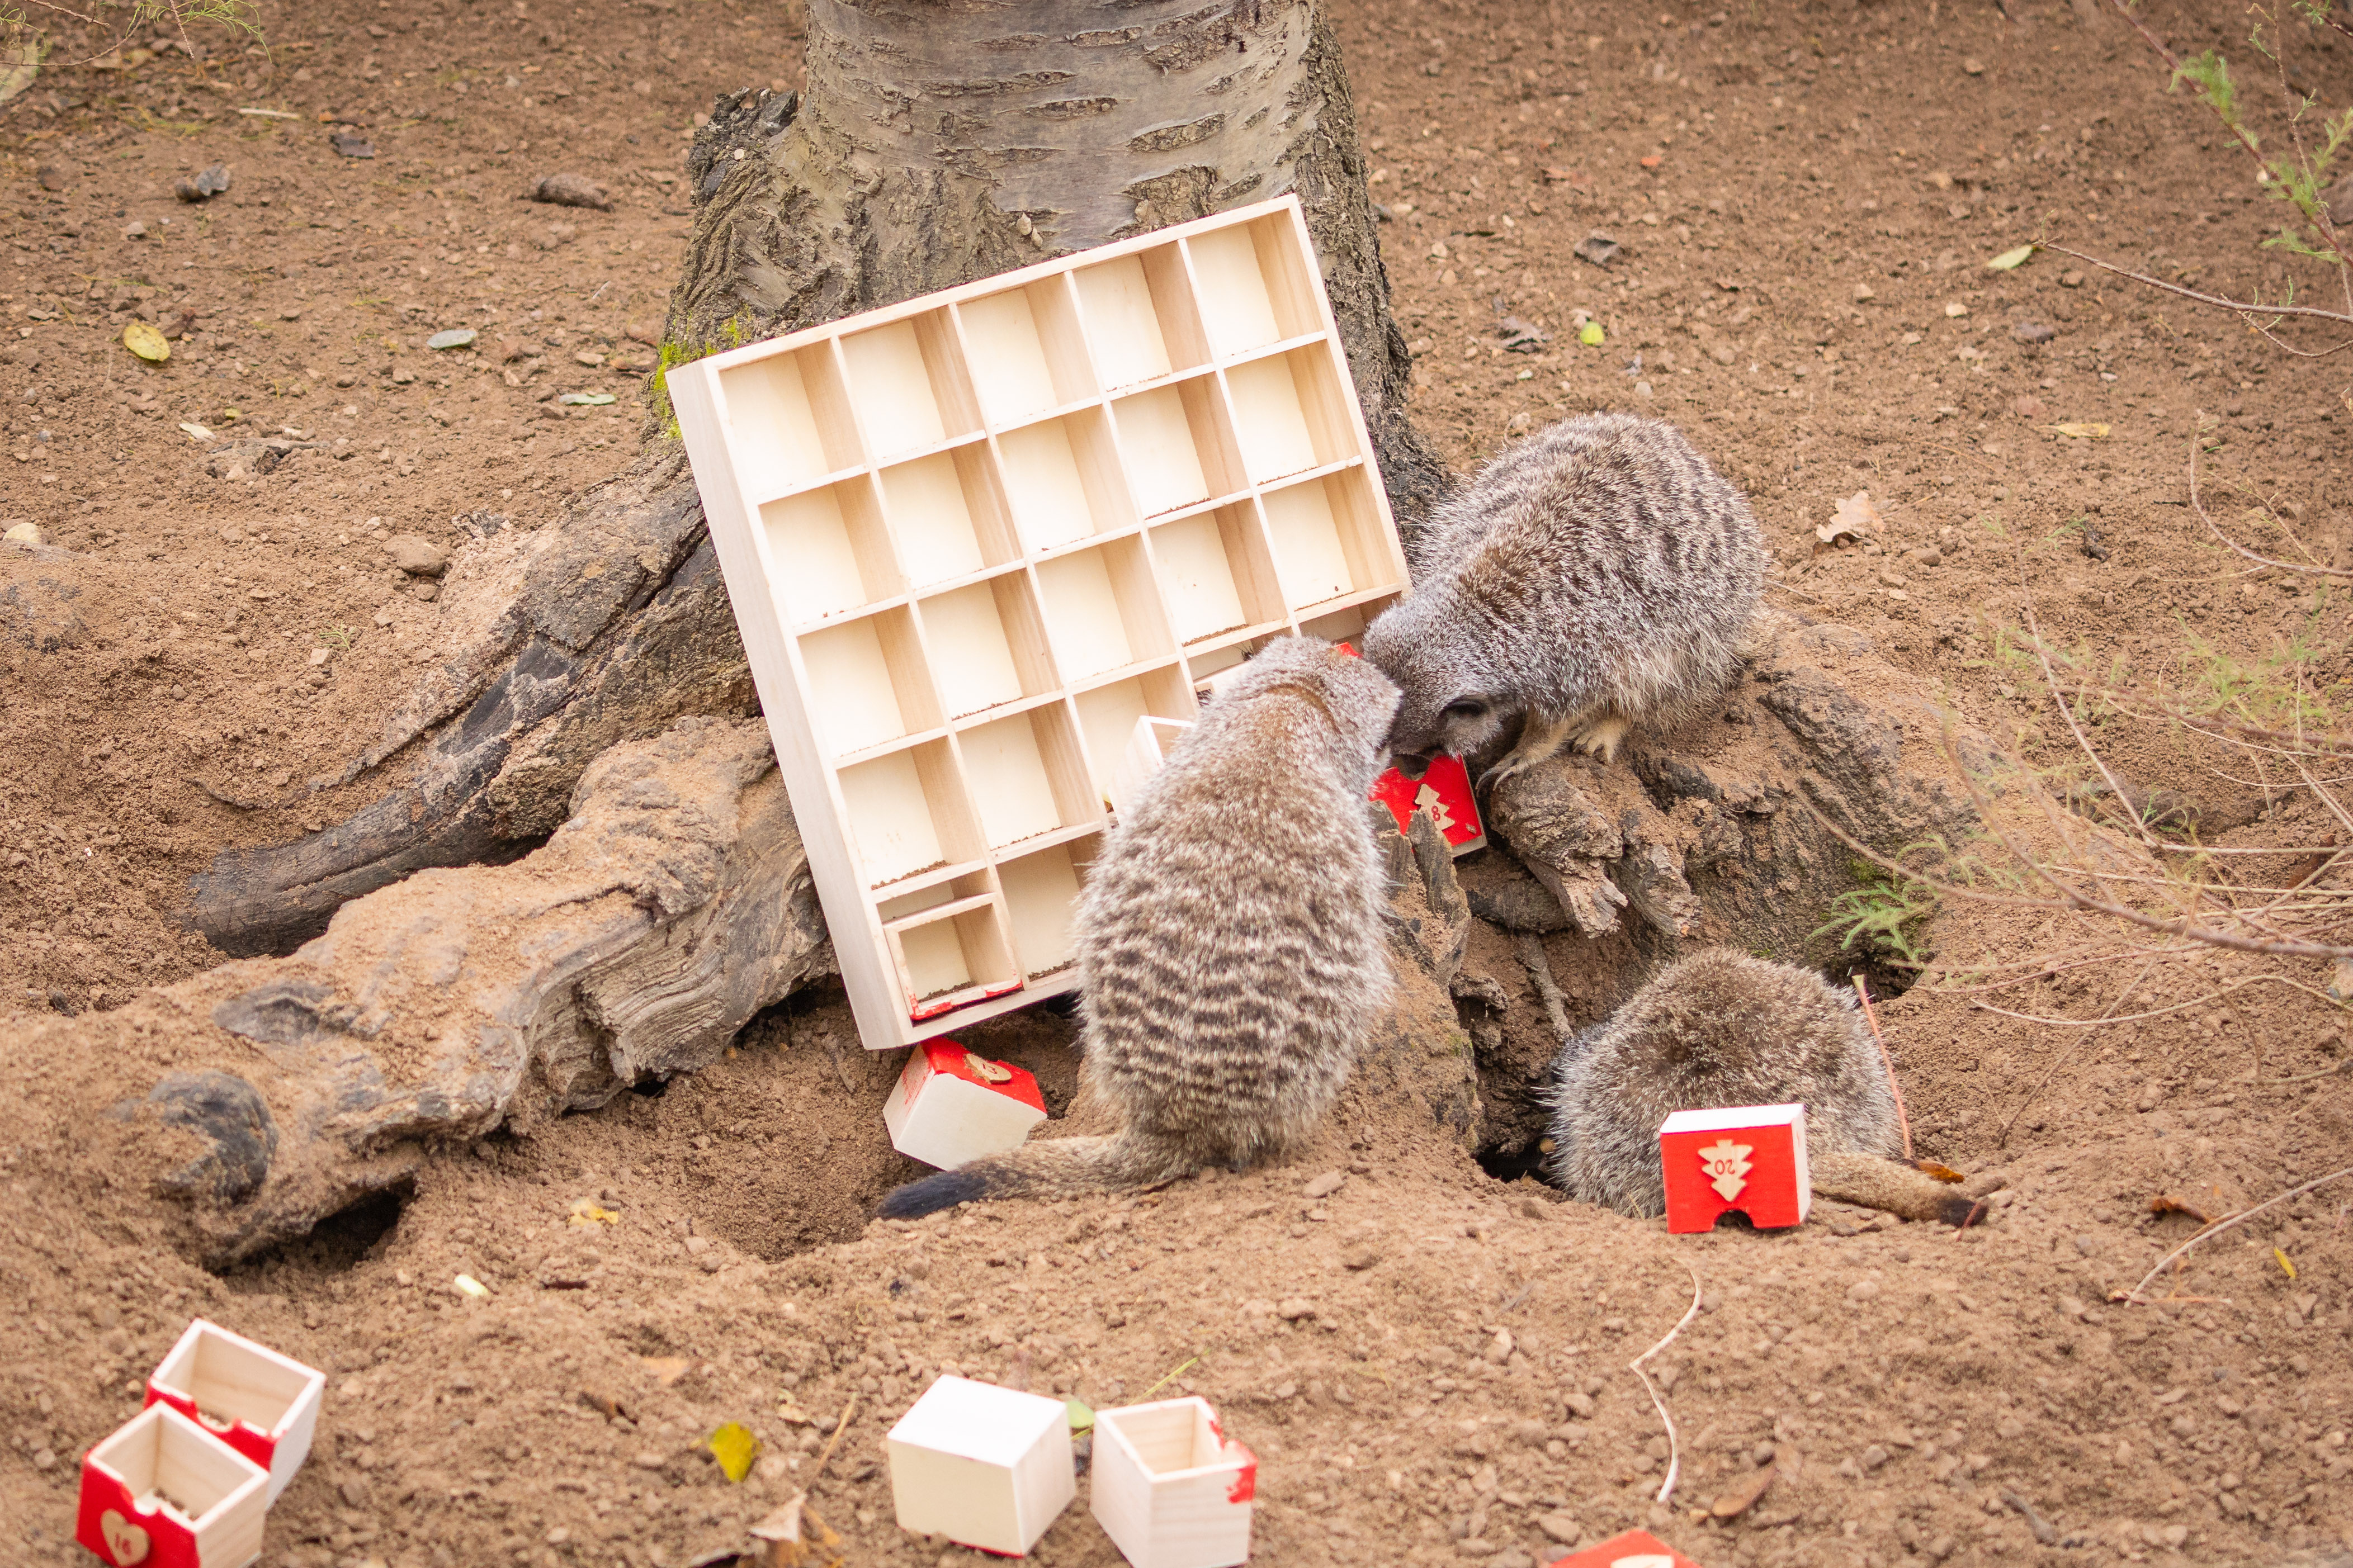 Meerkats open all the doors on their advent calendar